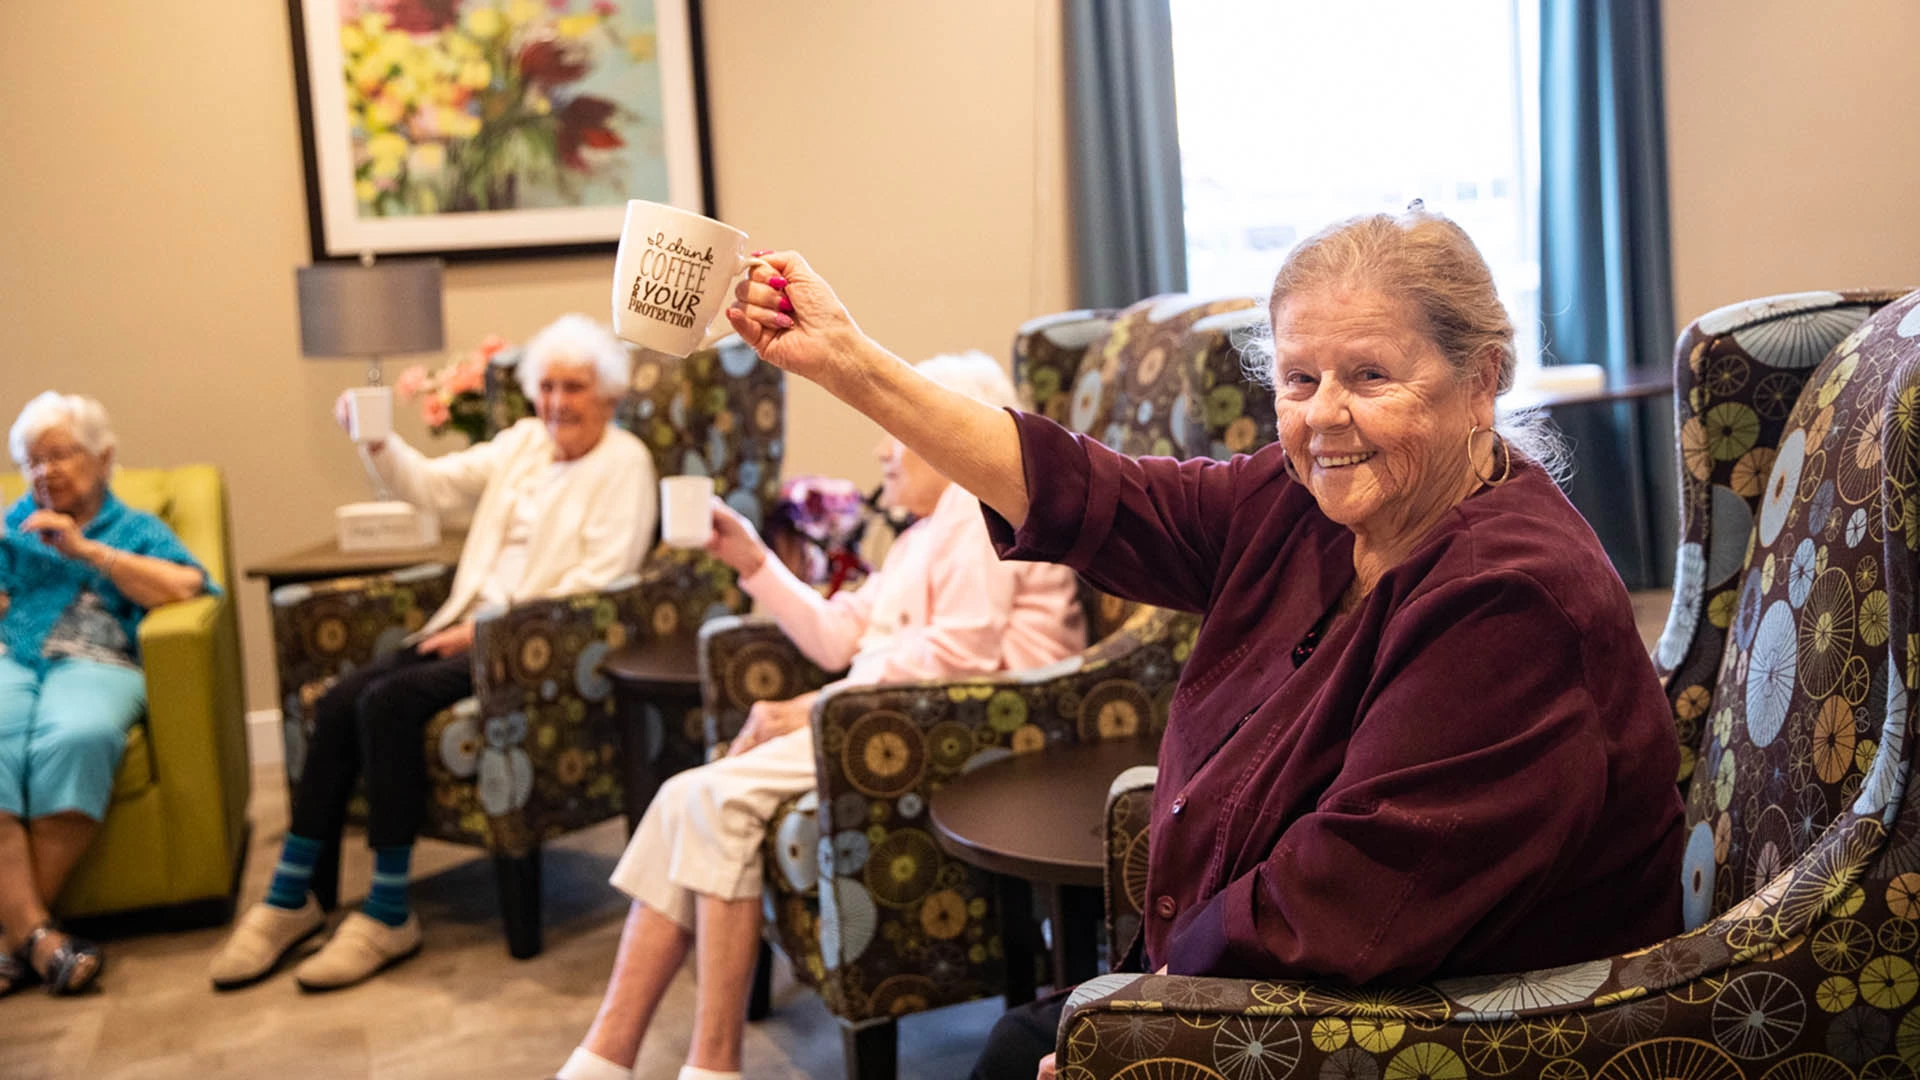 Senior citizens raising coffee cups in celebration